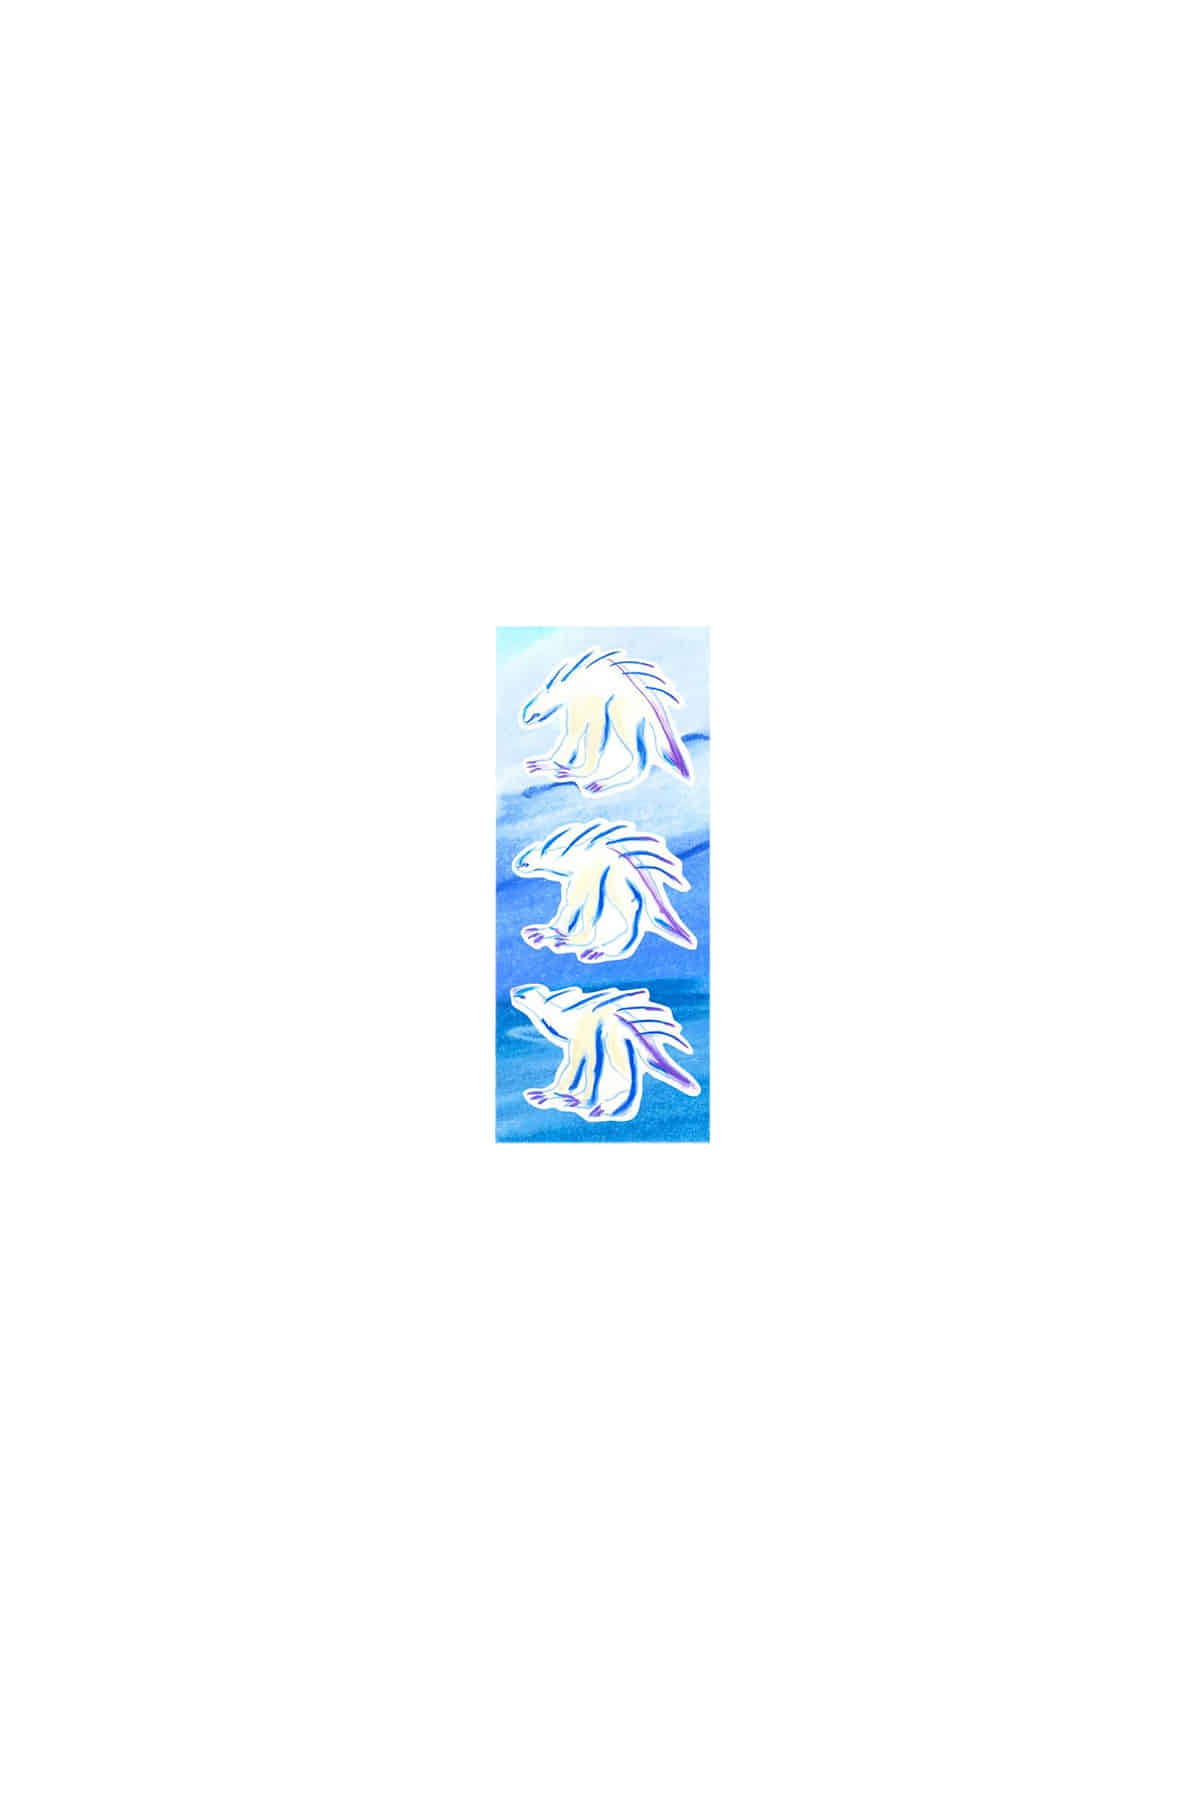 [sticker] Bent Thorny Animal